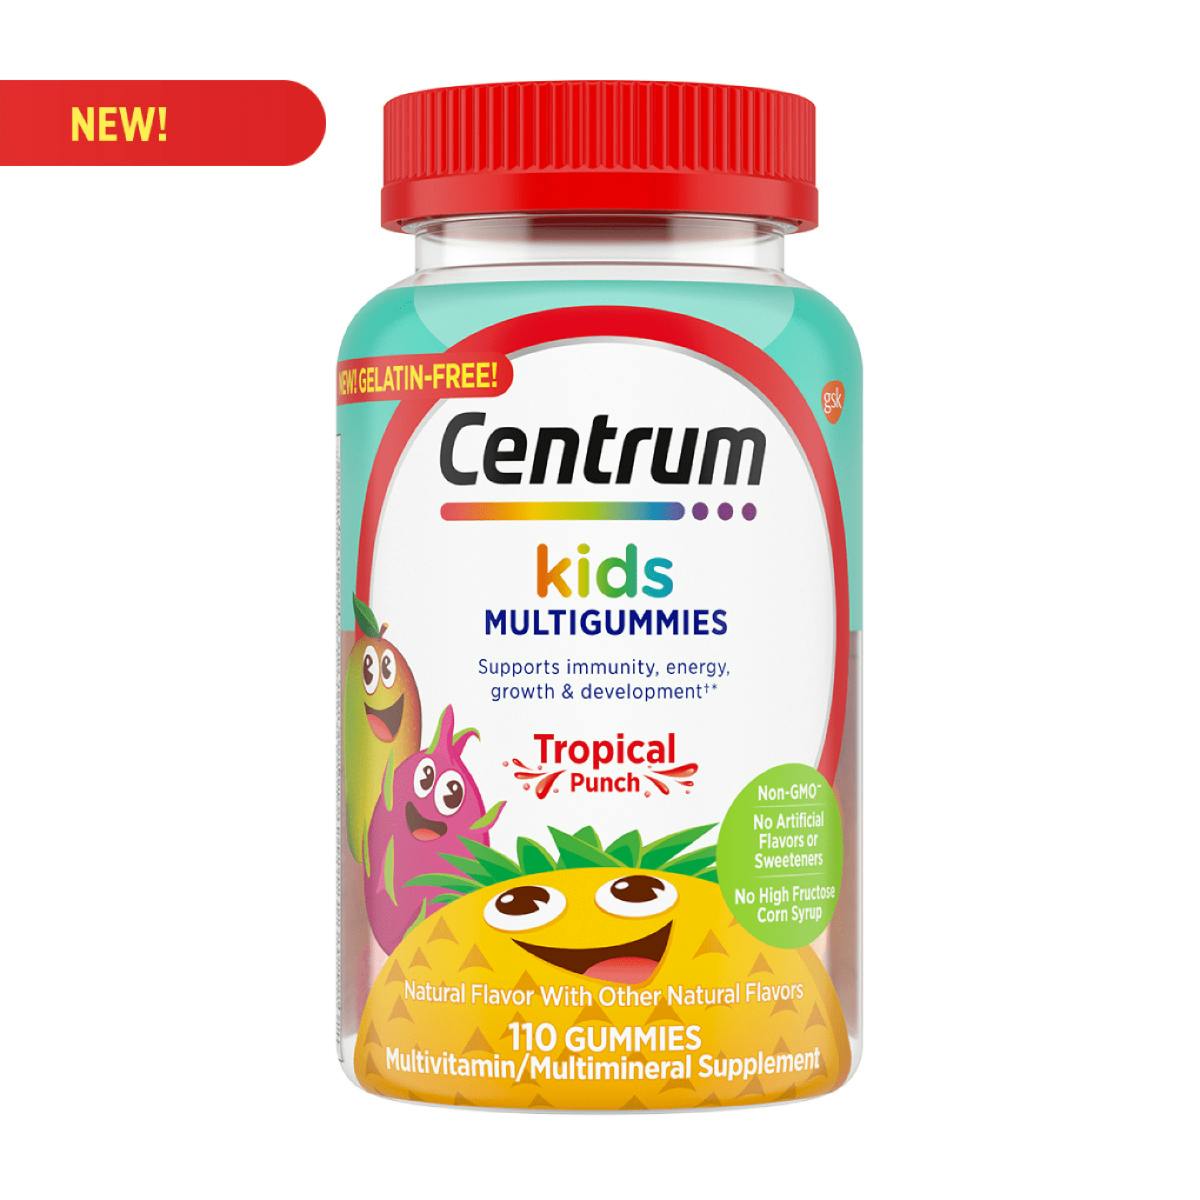 Bottle of Centrum Kids MultiGummies in Tropical Punch Flavors